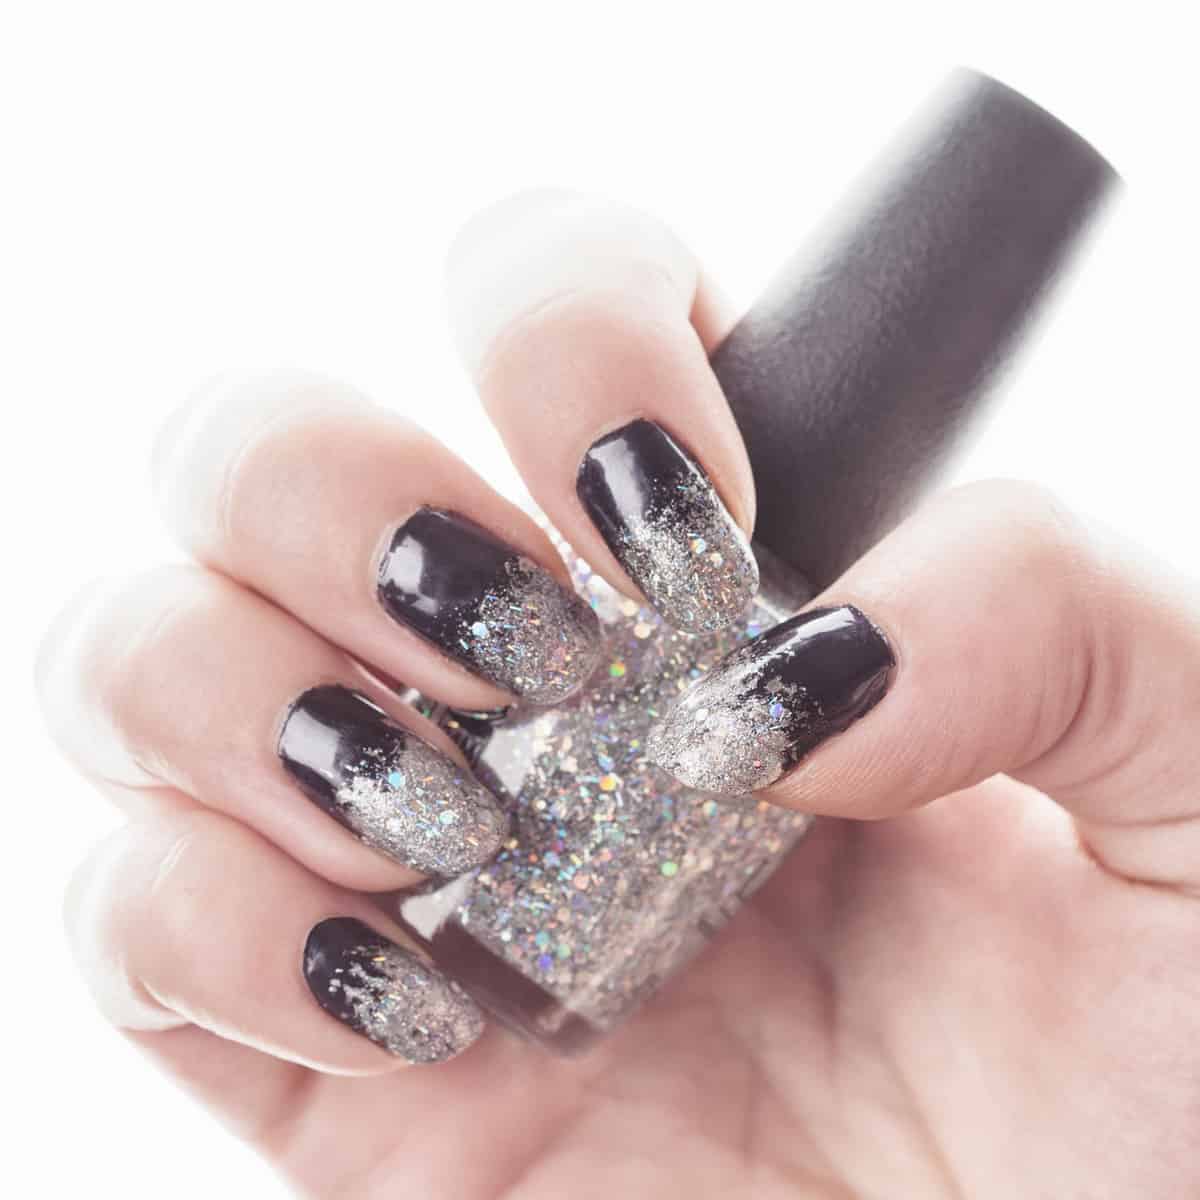 A woman holding gray glitter nails polish 